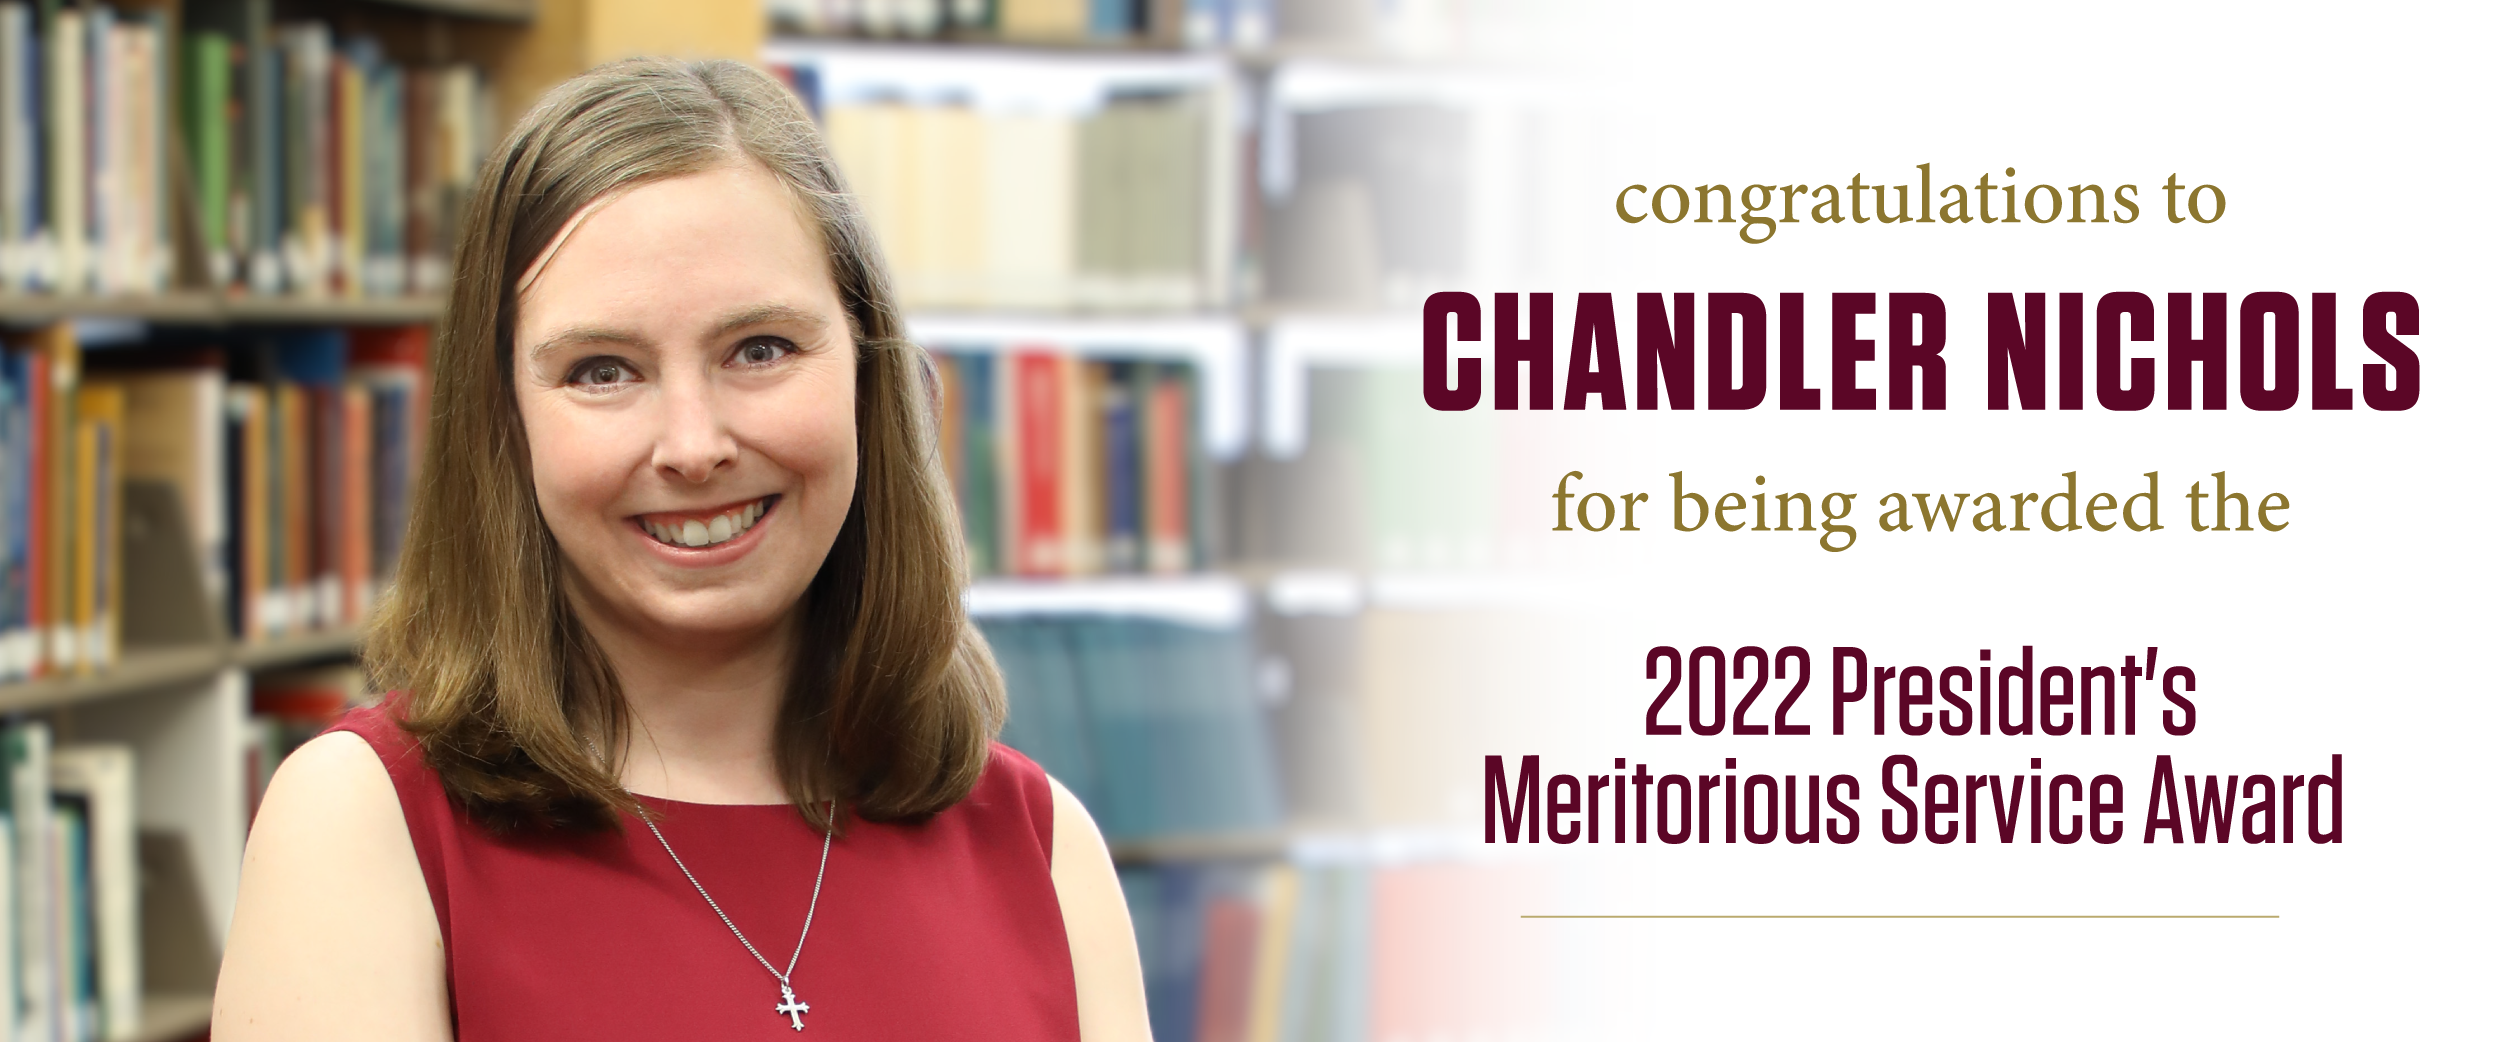 Chandler Nichols wins 2022 President’s Meritorious Service Award